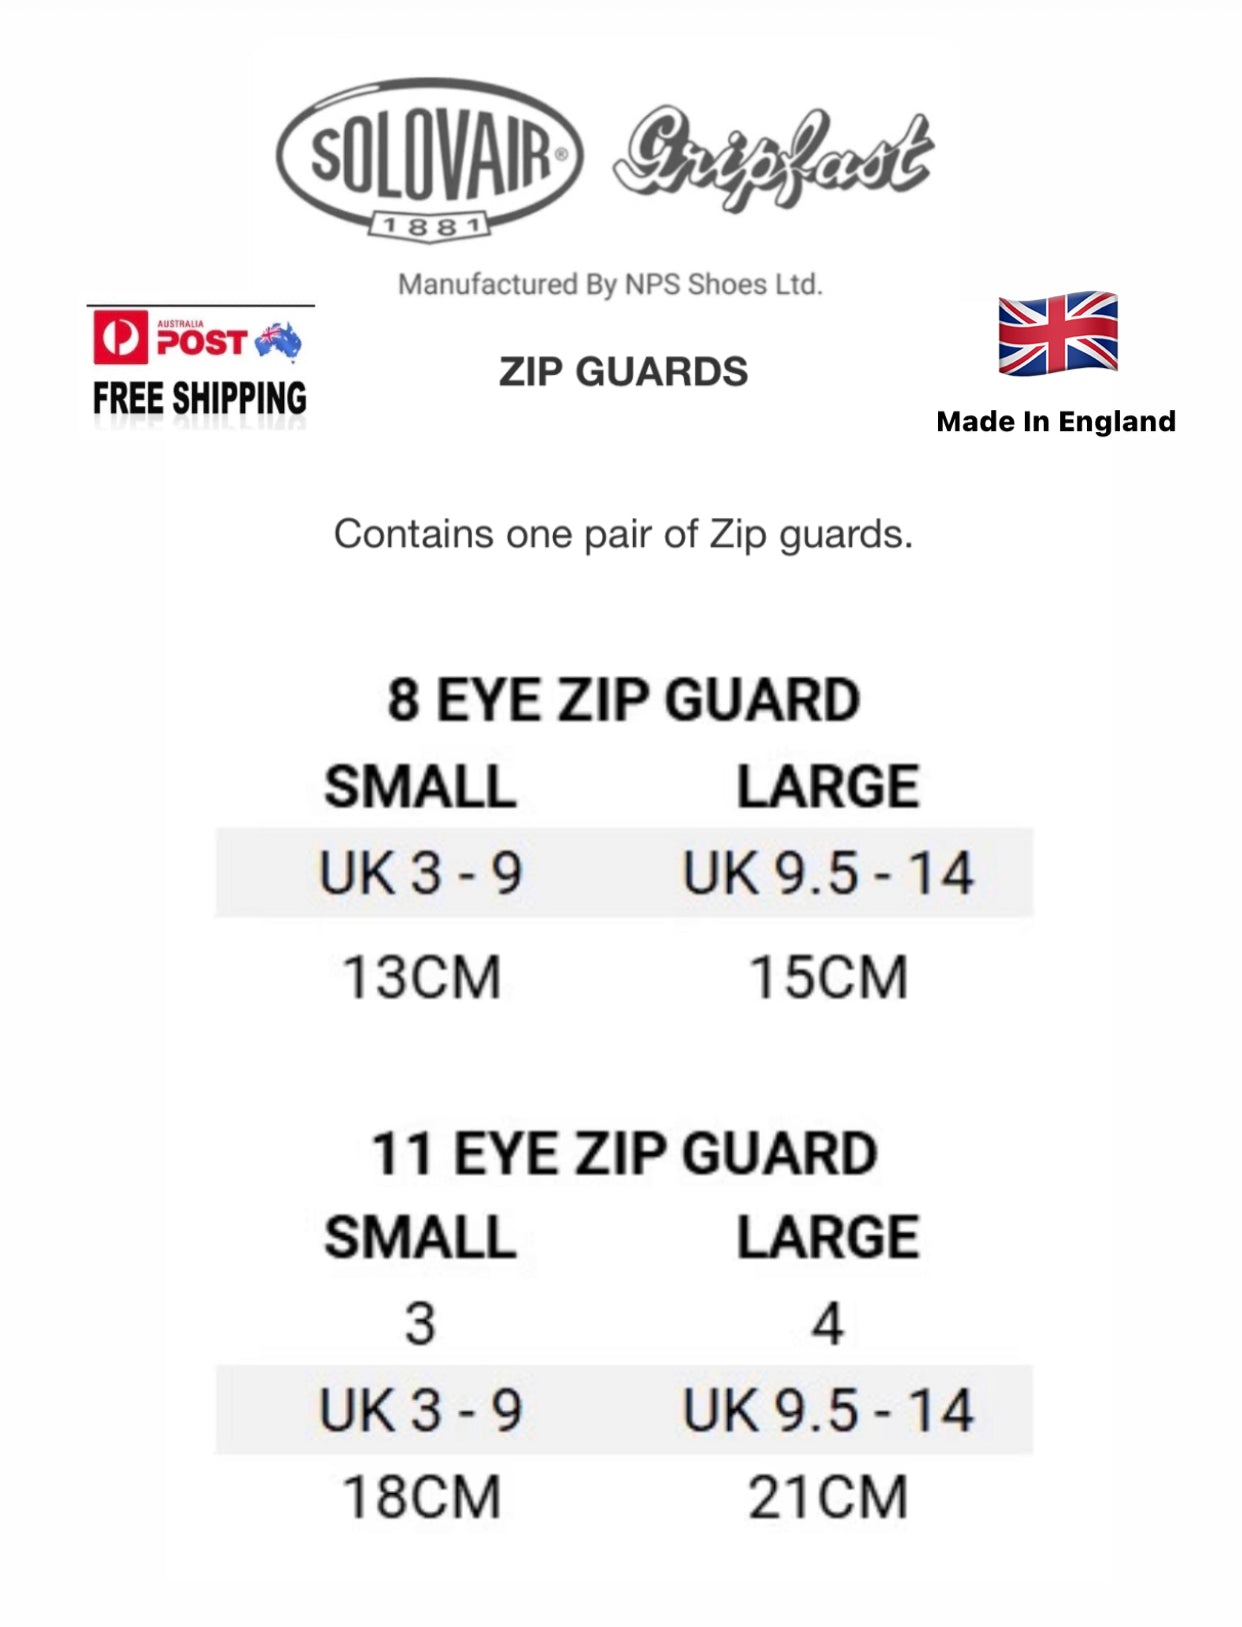 Solovair Gripfast 11 Eye Zip Guard Black Hi-Shine Made In England